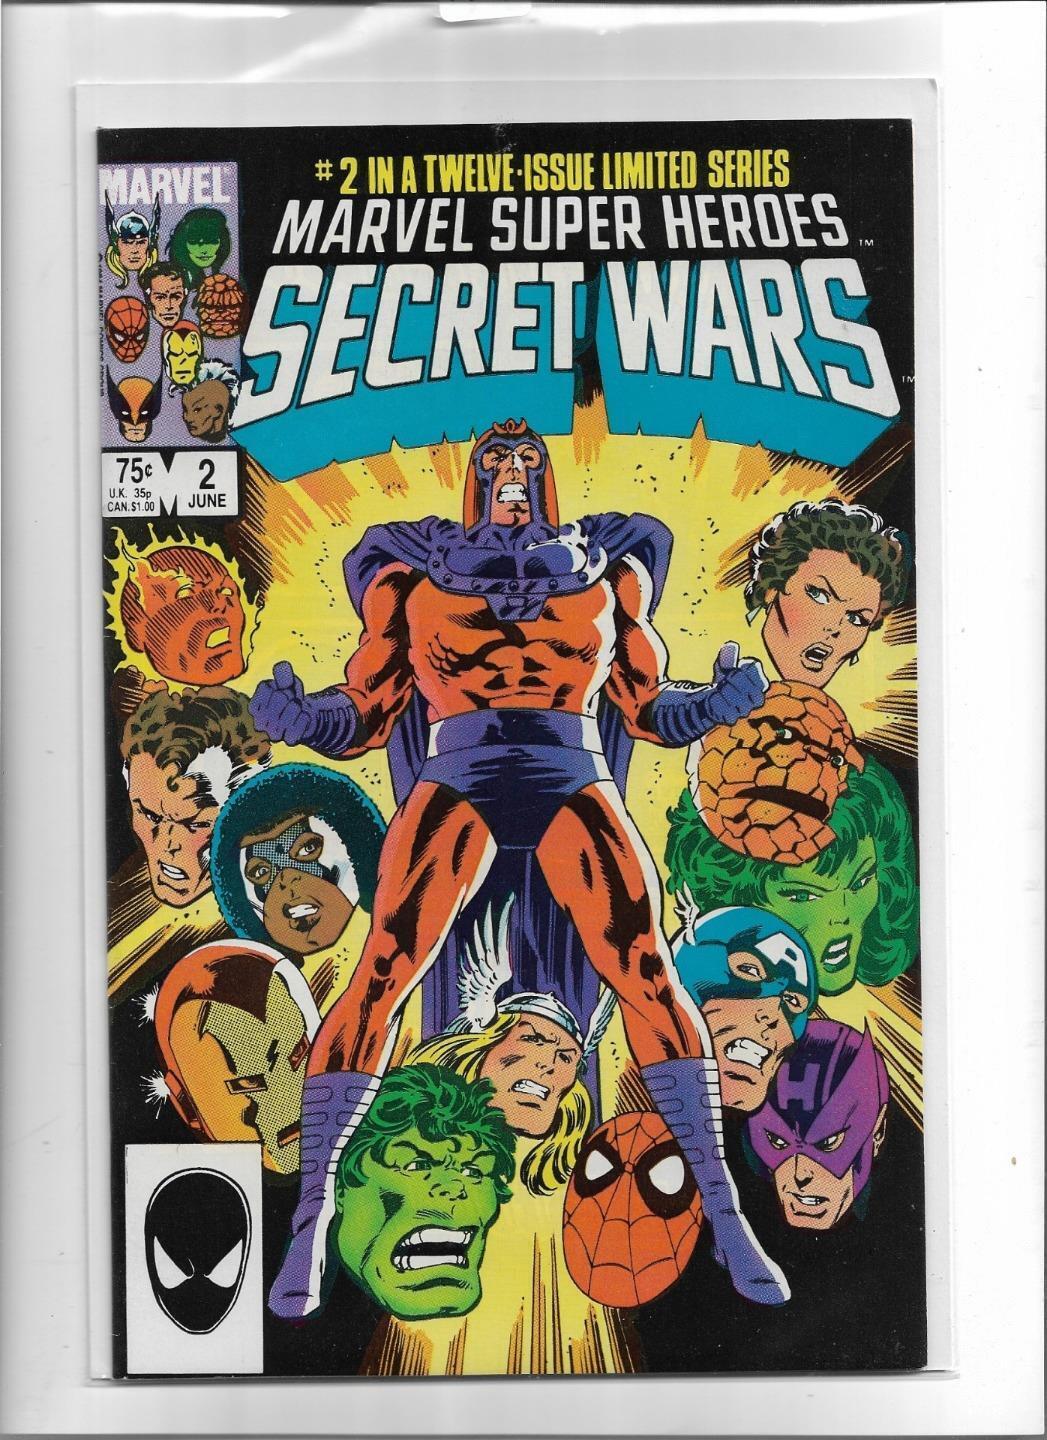 MARVEL SUPER HEROES SECRET WARS #2 1984 NEAR MINT 9.4 3373 MAGNETO